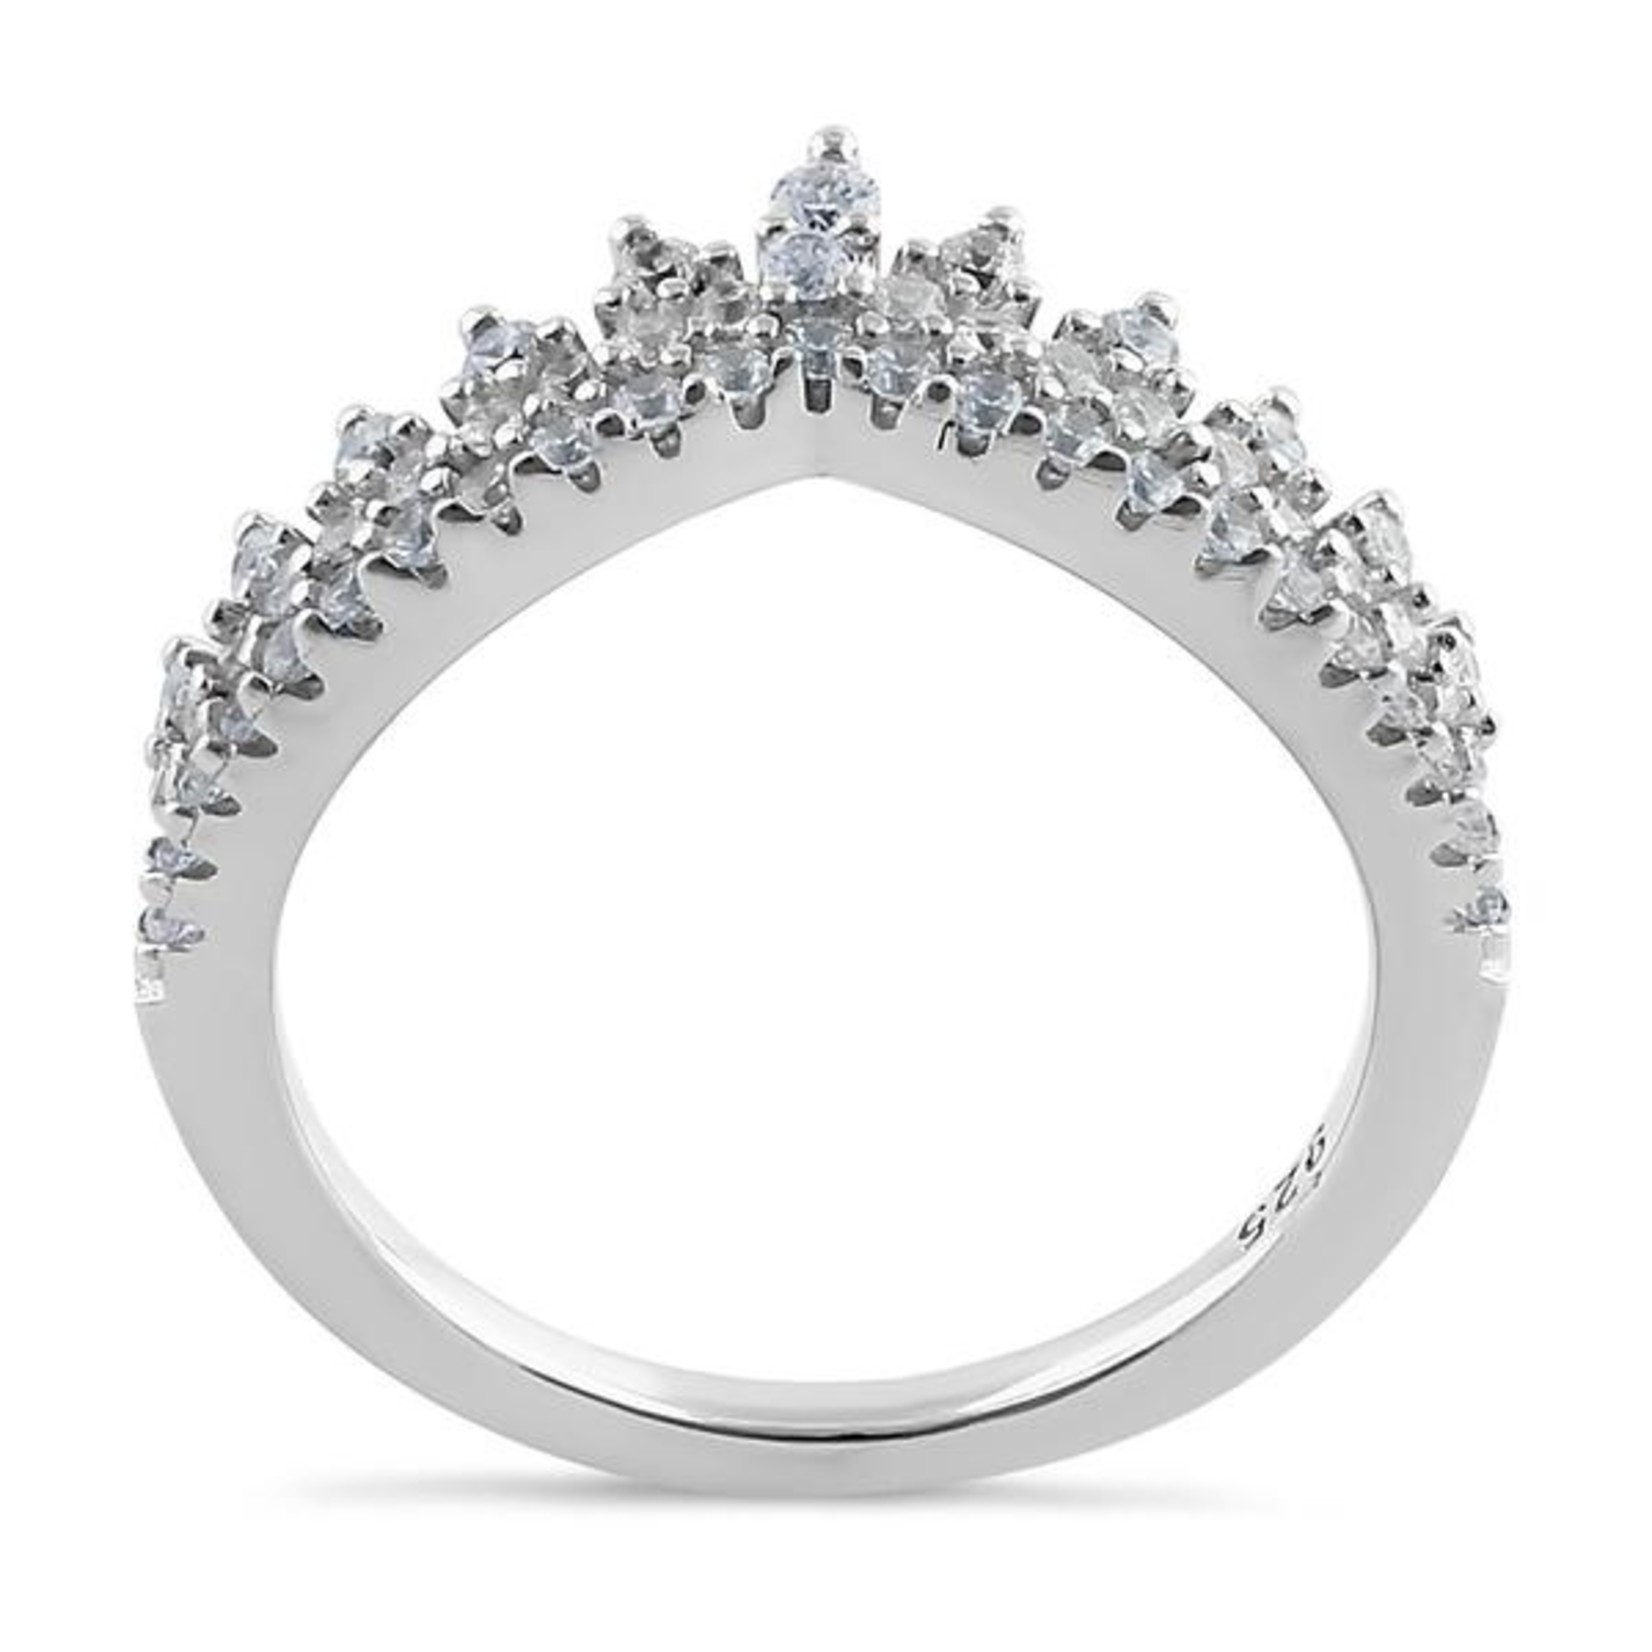 RLD Silver CZ Crown Ring